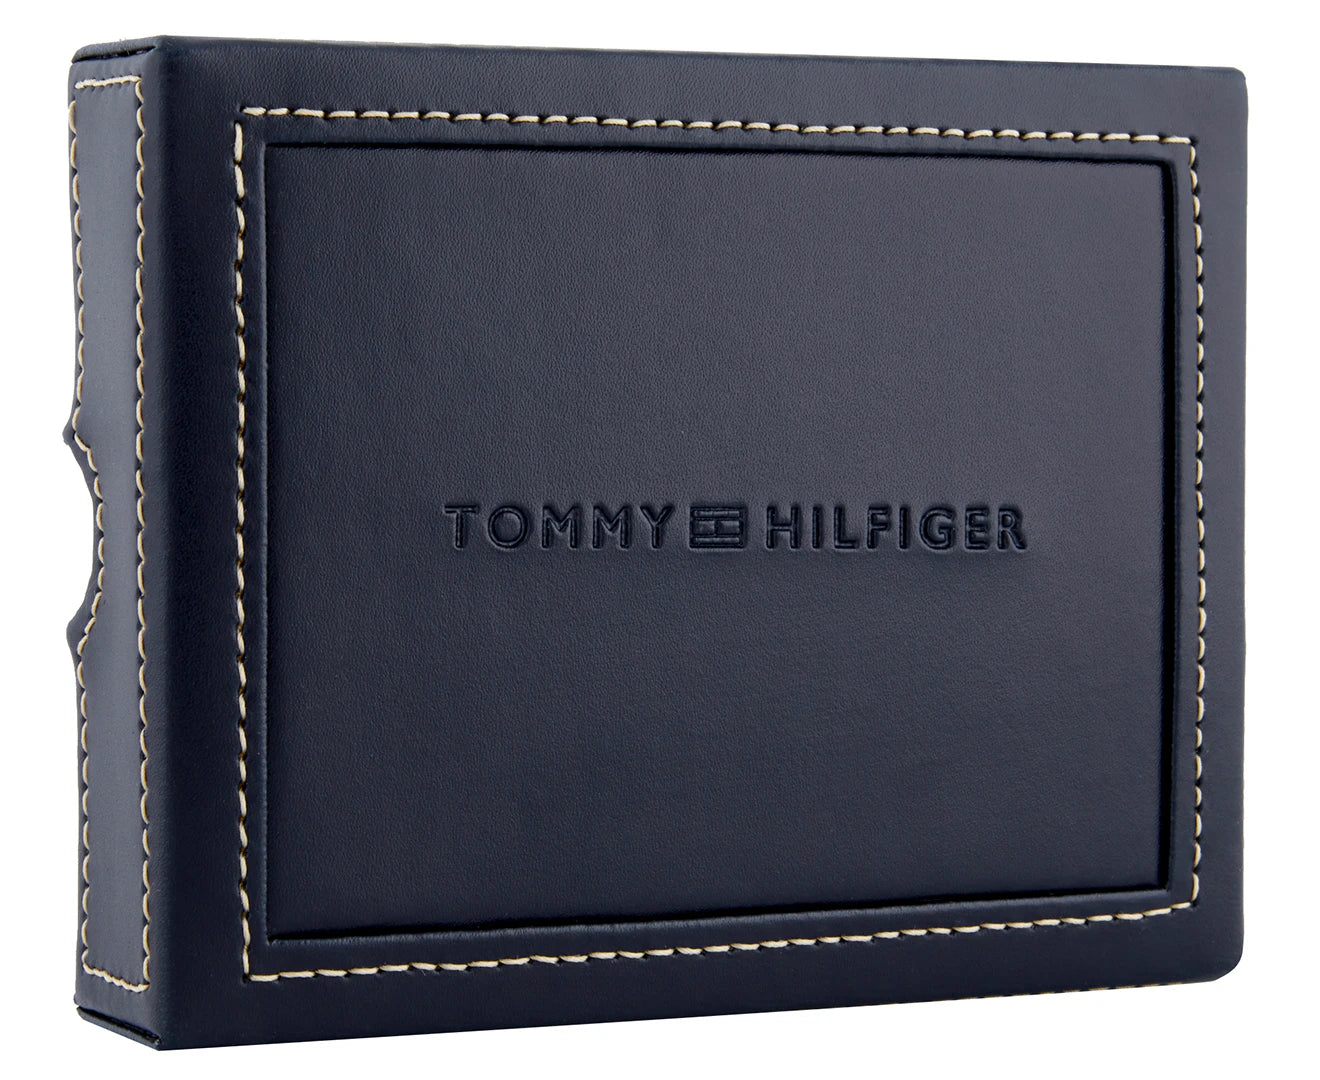 Tommy Hilfiger Men's Leather Wallet Cambridge Passcase Billfold Wallet, Black (Box)